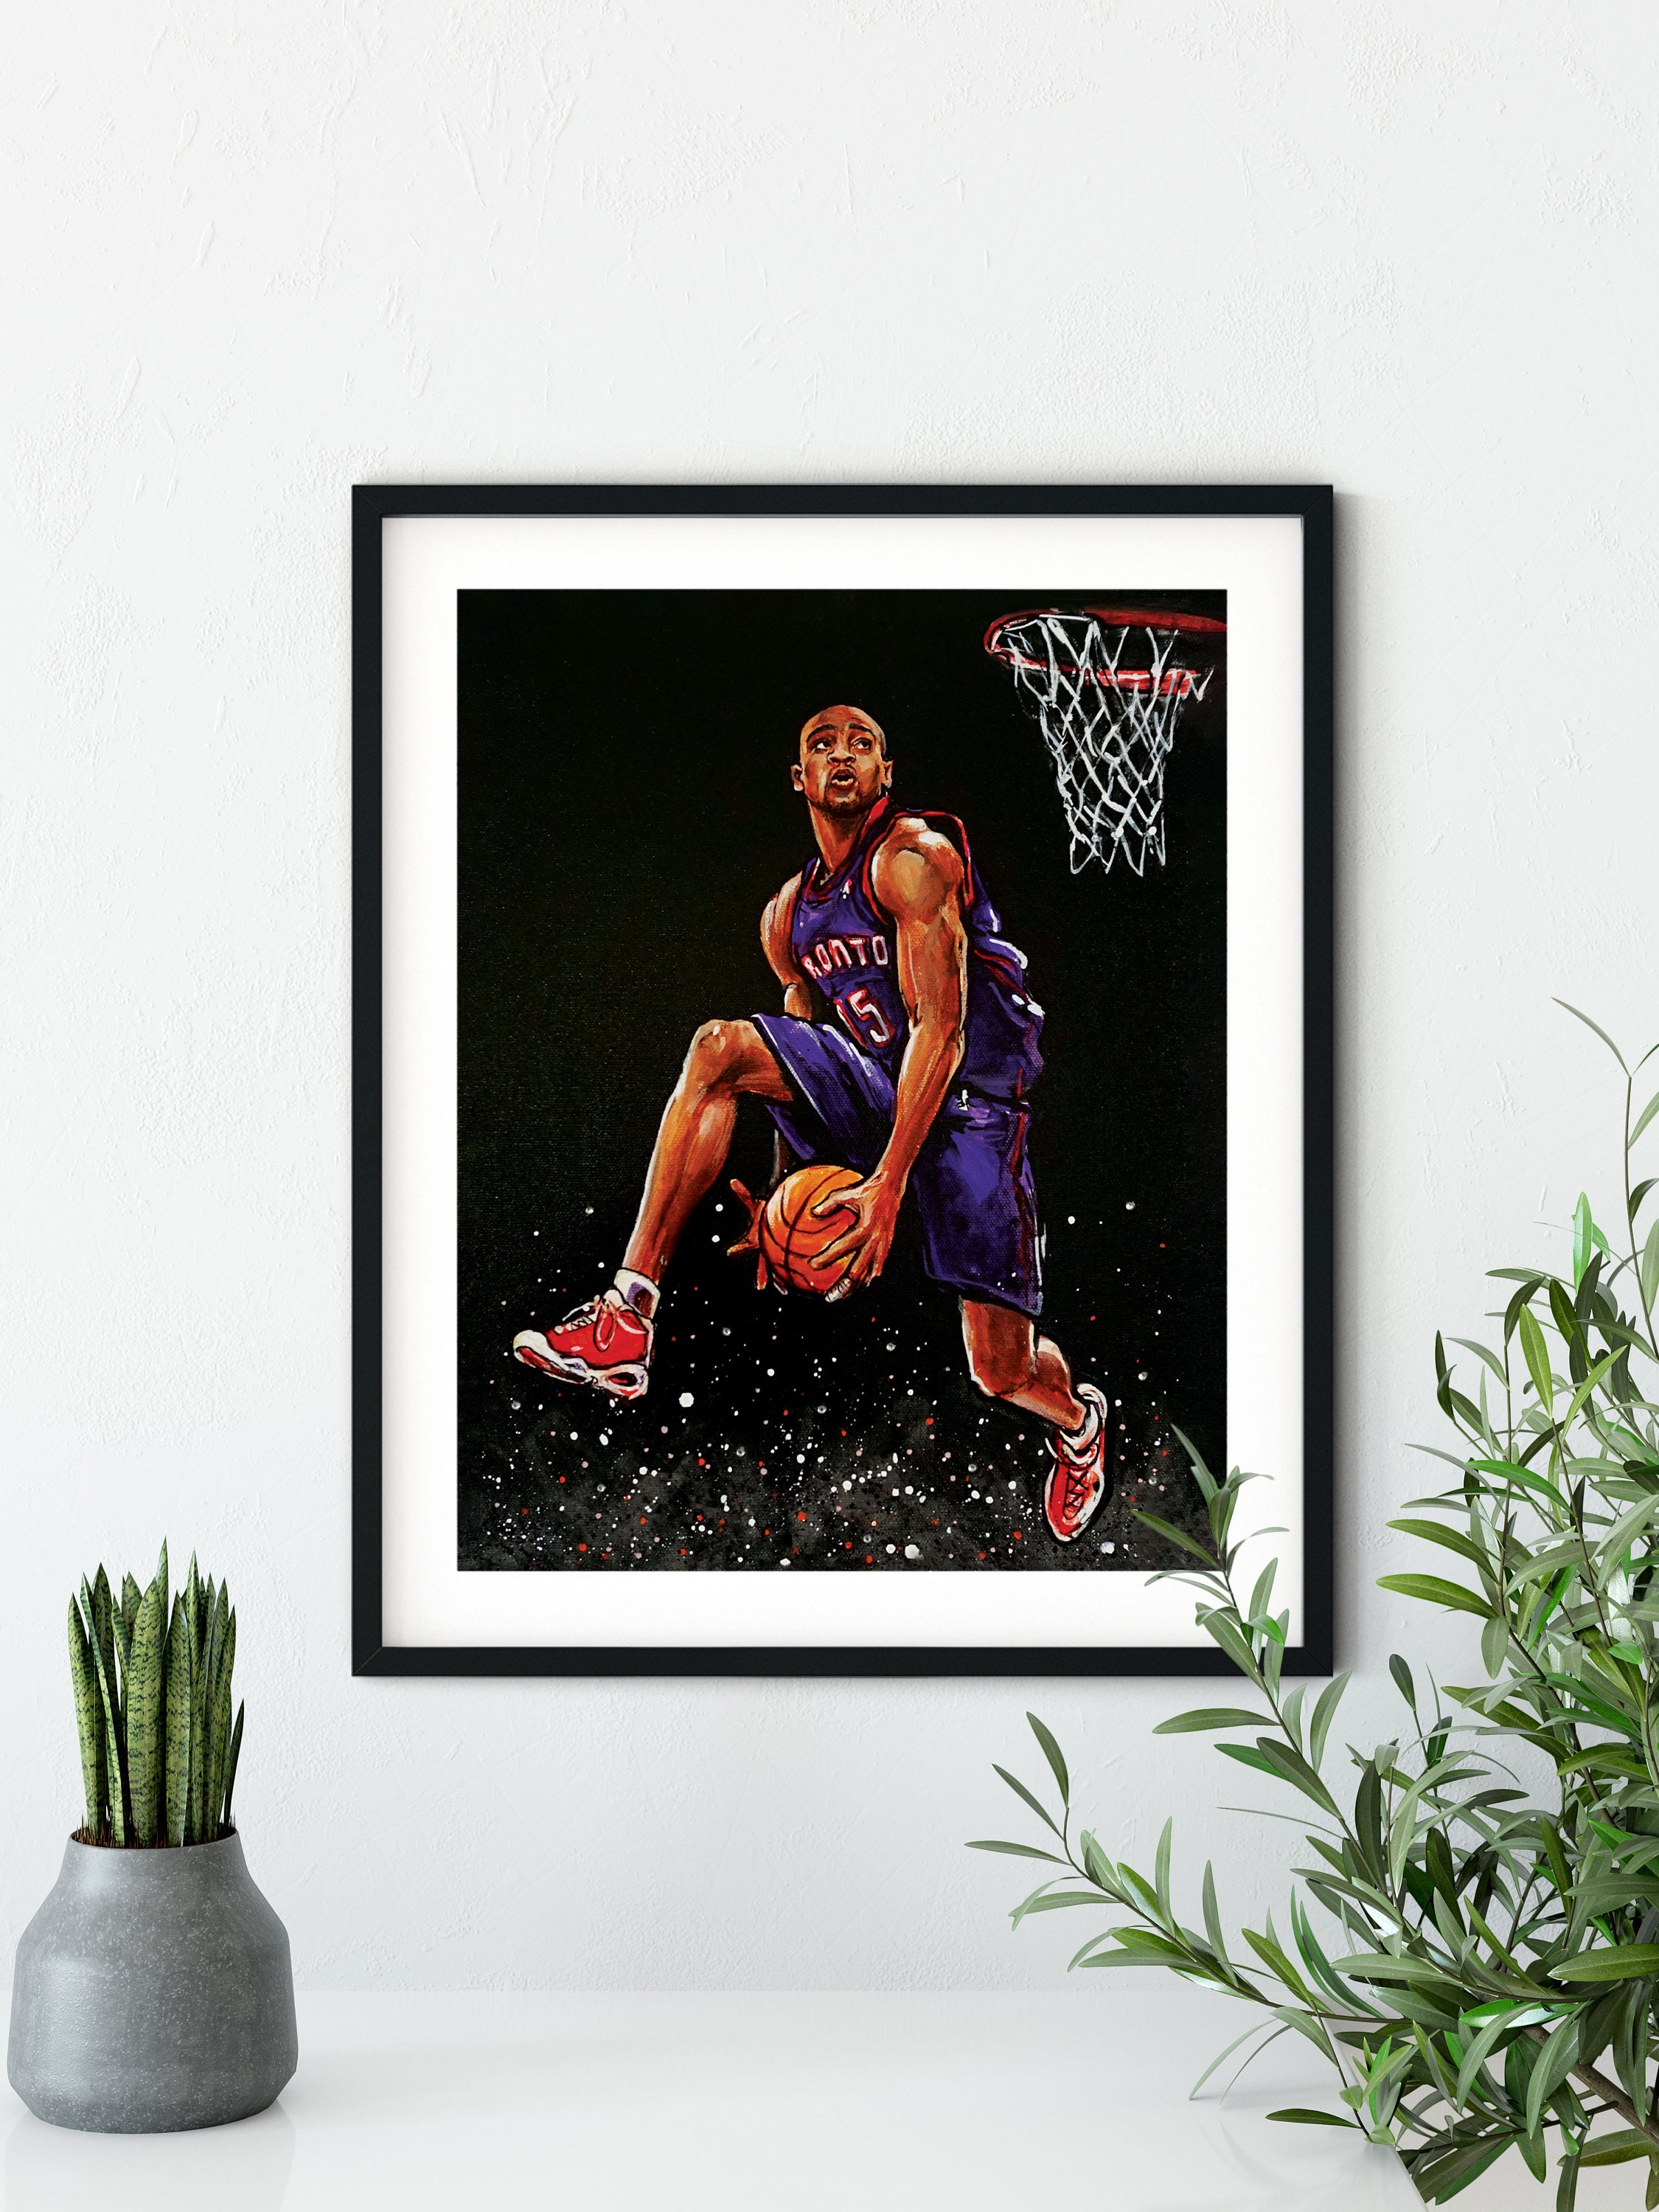 Vince Carter Wallpaper Explore more American, basketball player, Former,  professional, Vince Carter wallpaper.